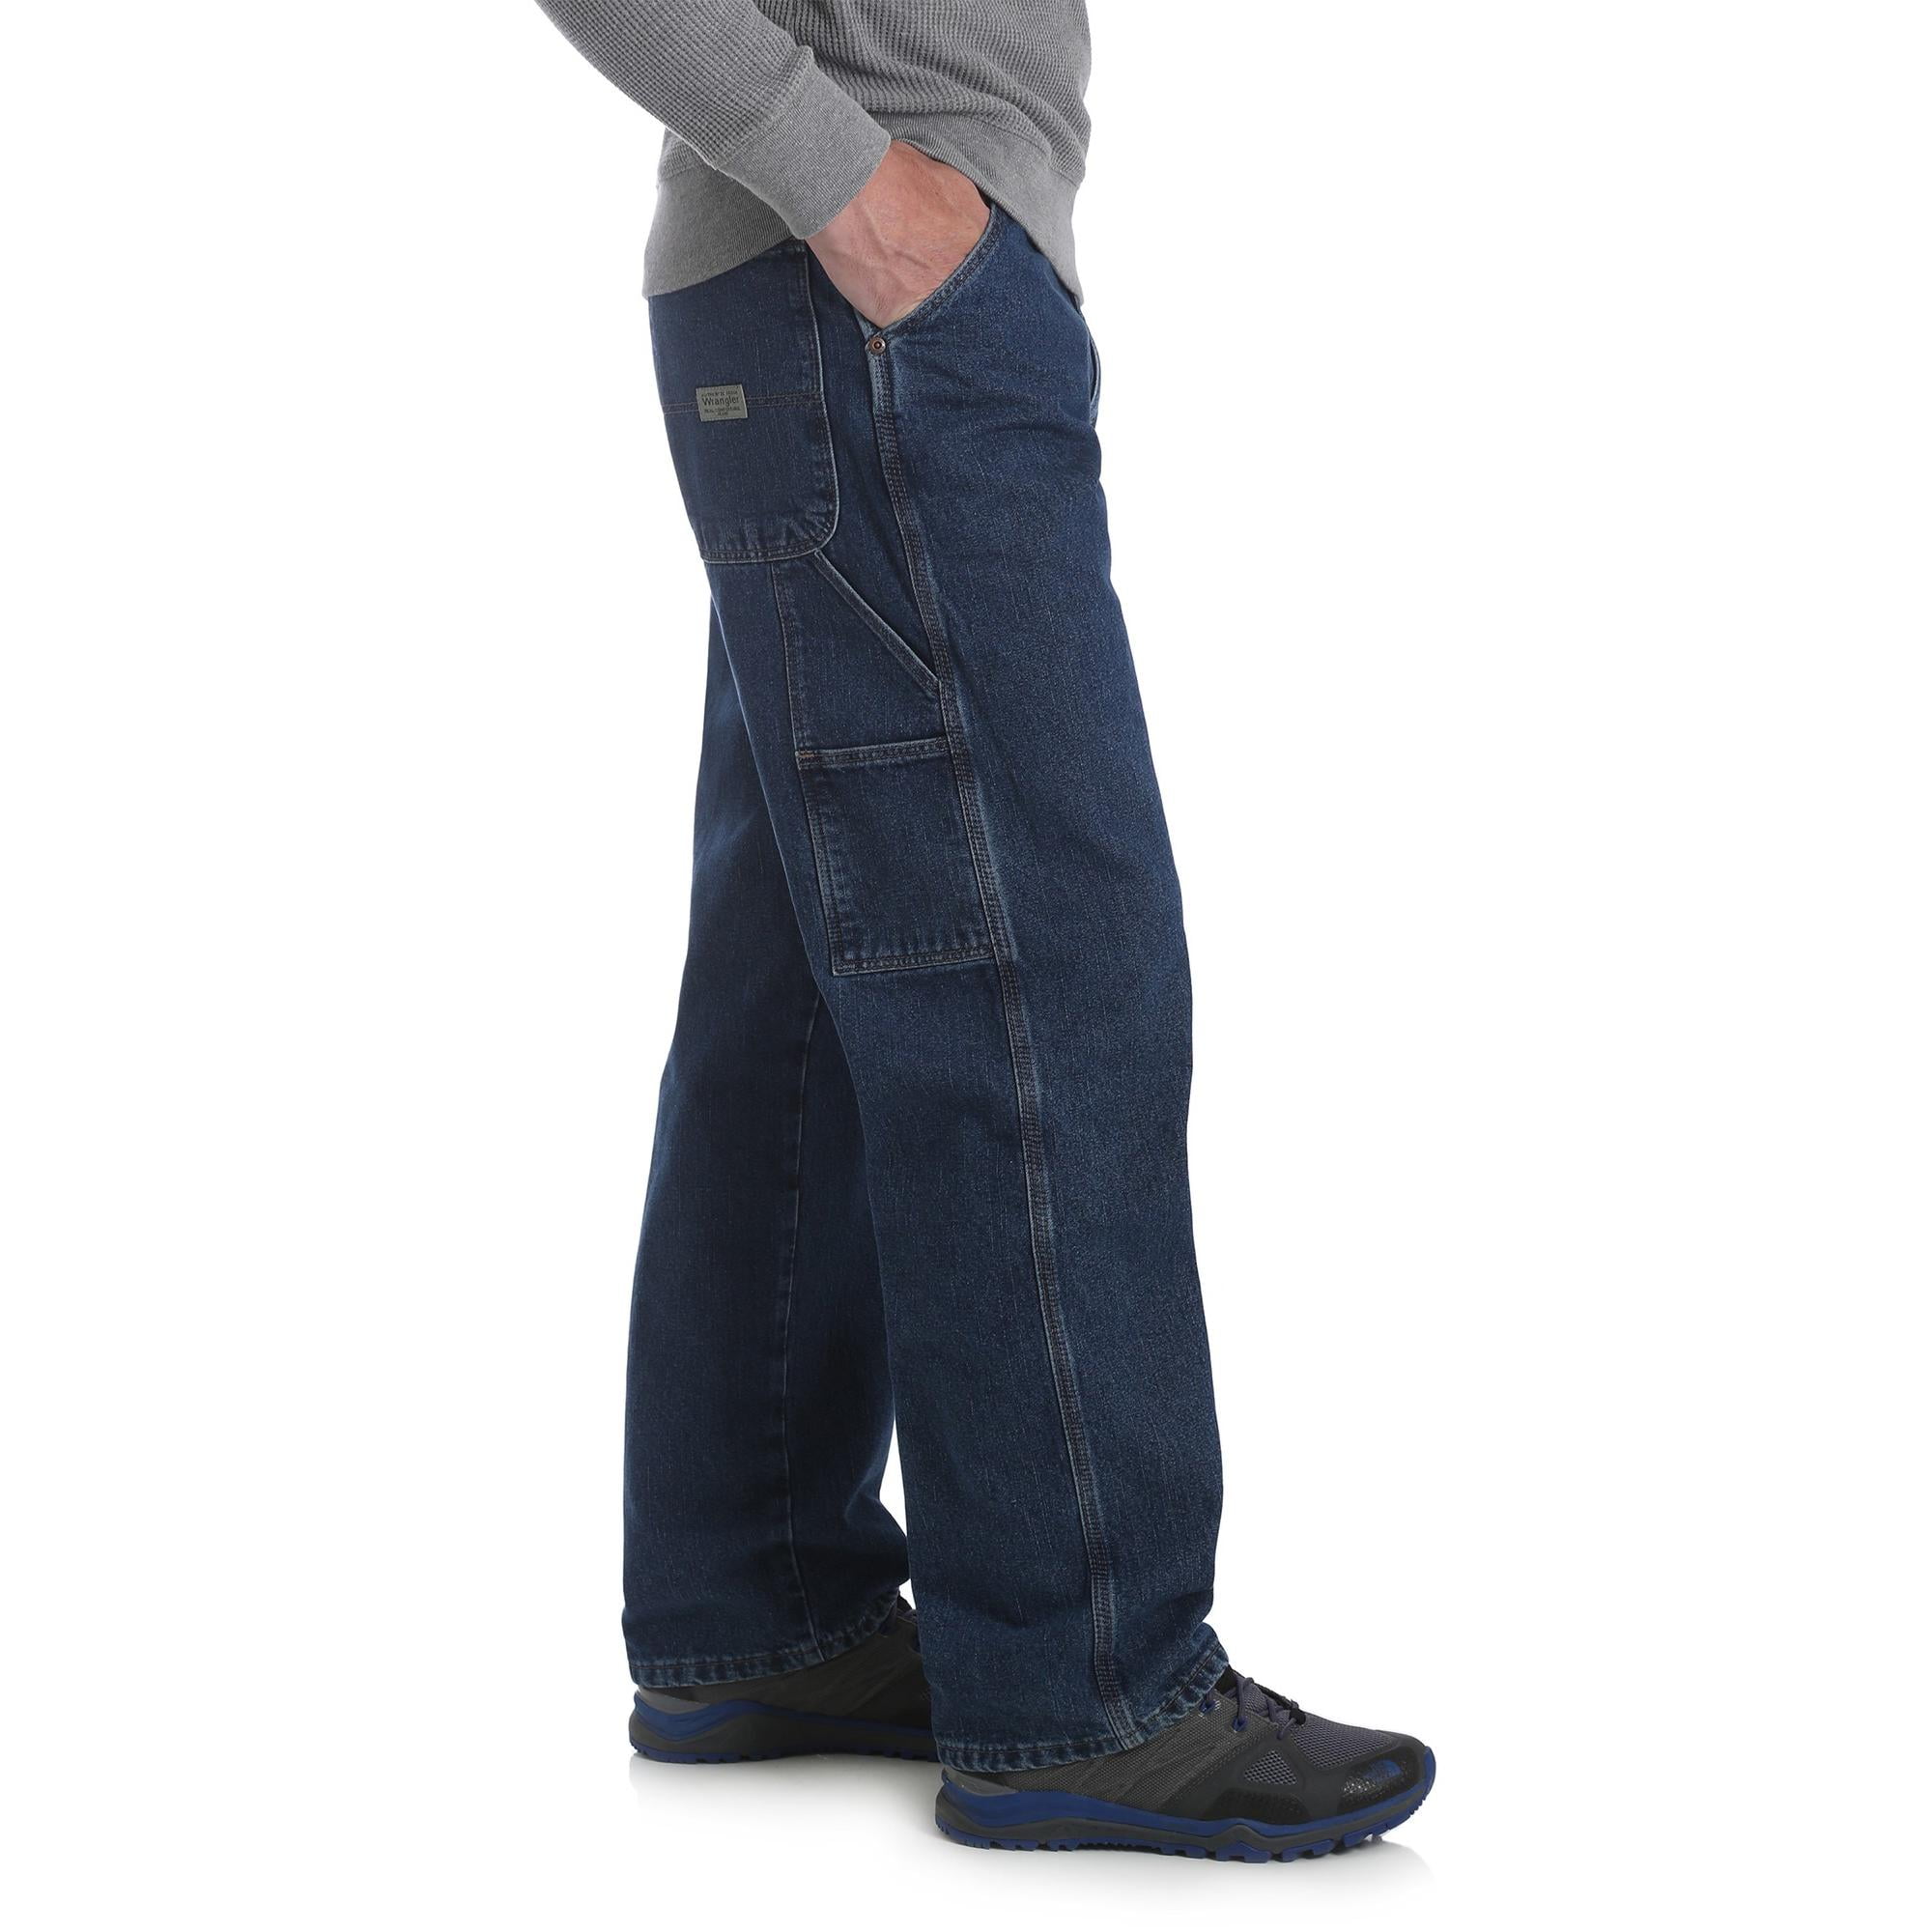 wrangler blue jeans at walmart